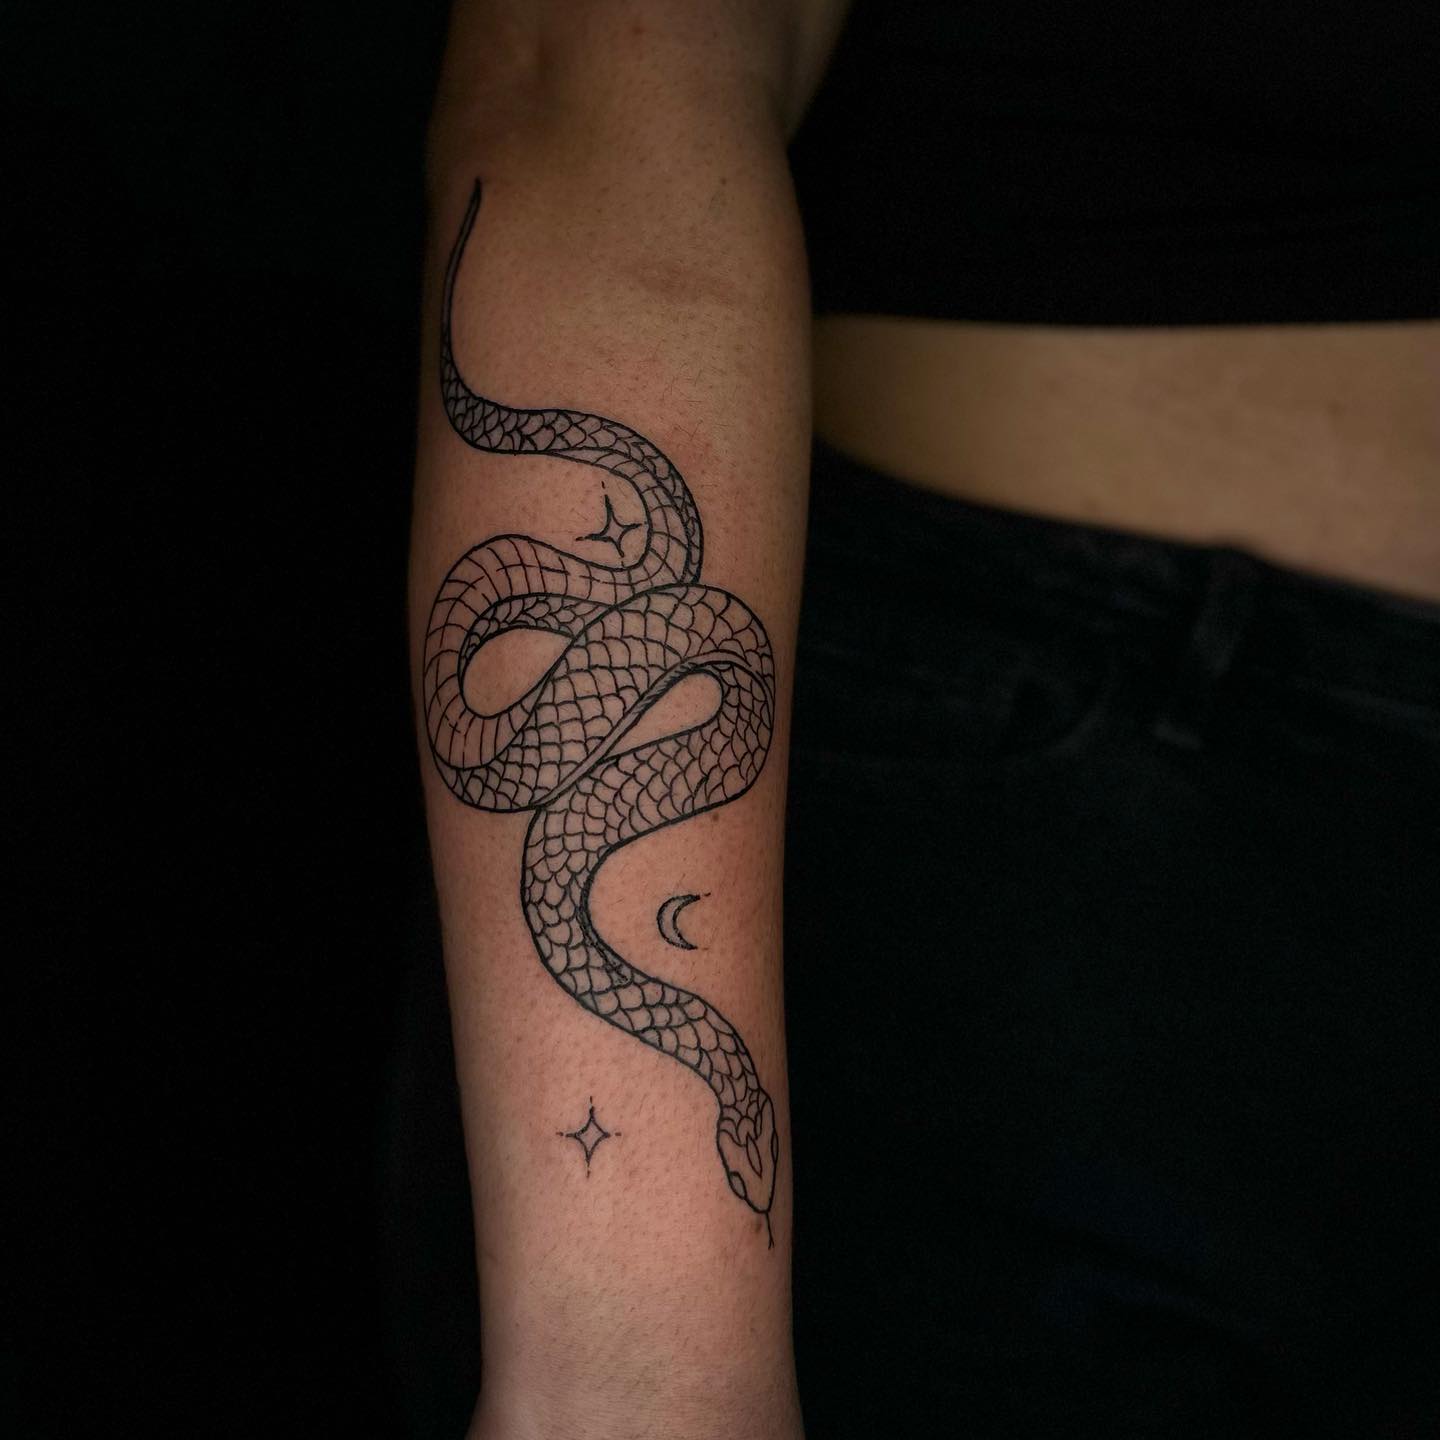 Snake  
Thank you 
.
.
#snake #snaketattoo #tattoo #tattoos #tattooartist #tatto